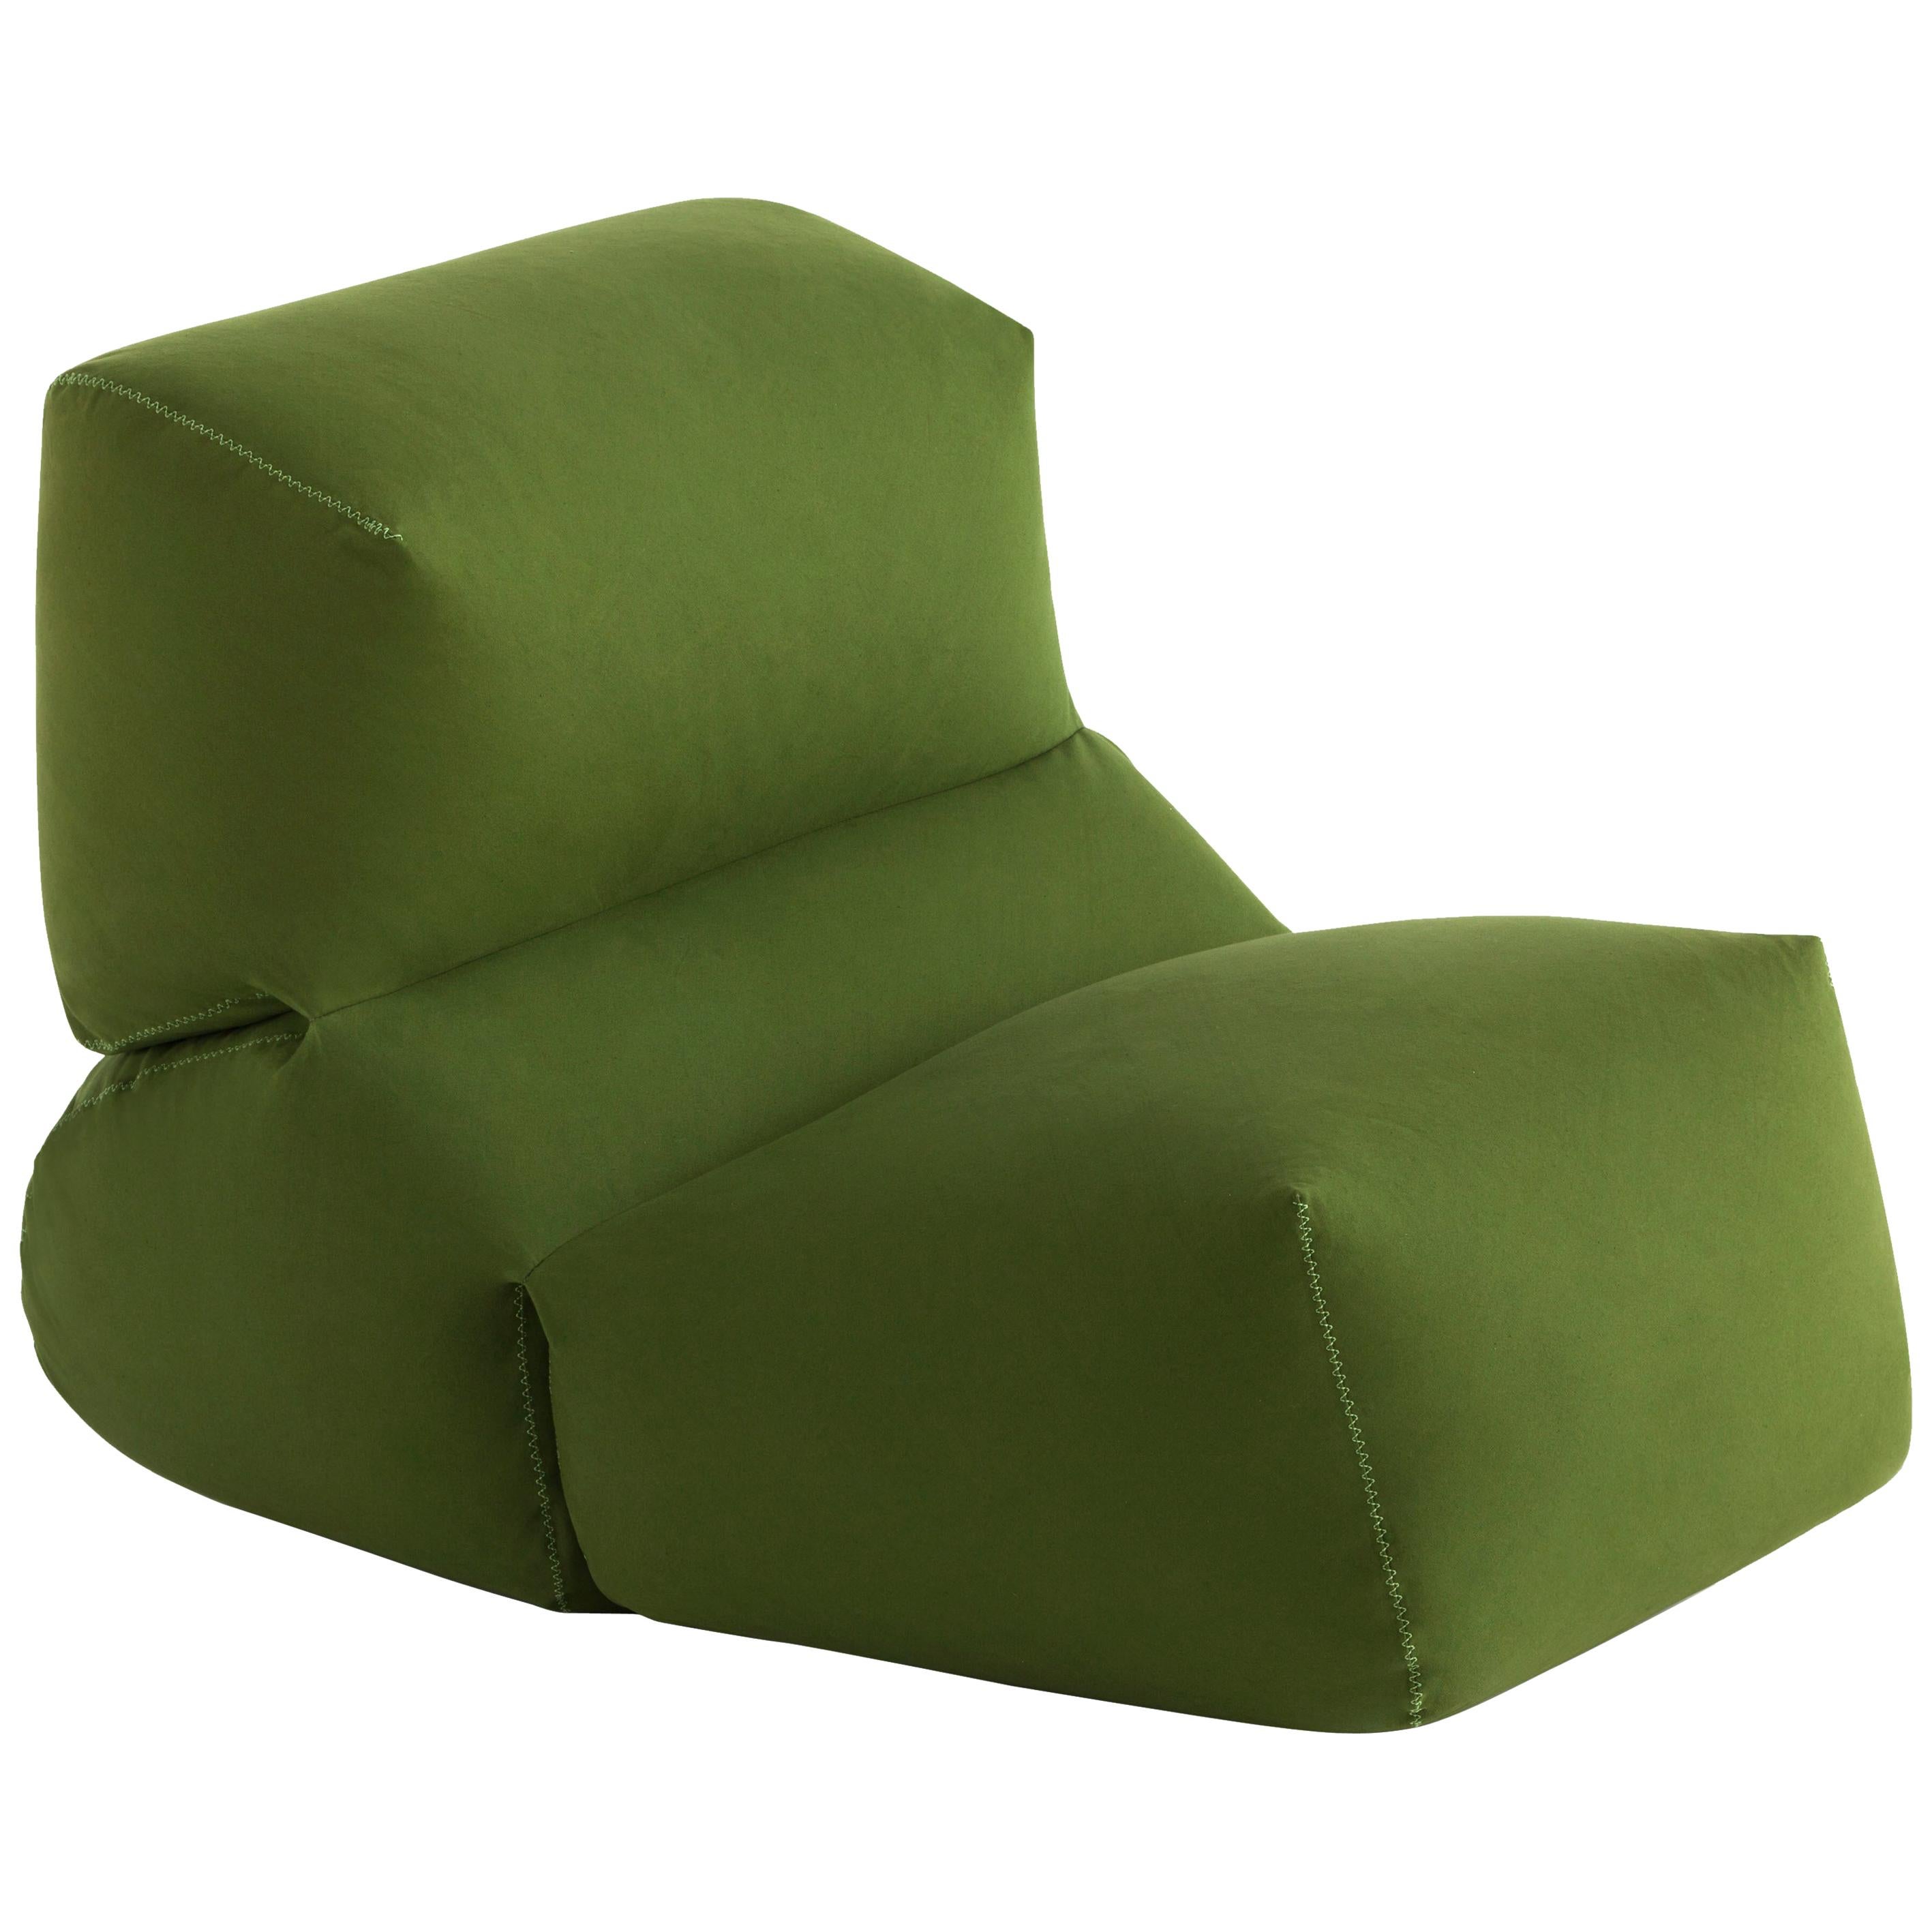 GAN Grapy Soft Lounge Chair by Kensaku Oshiro